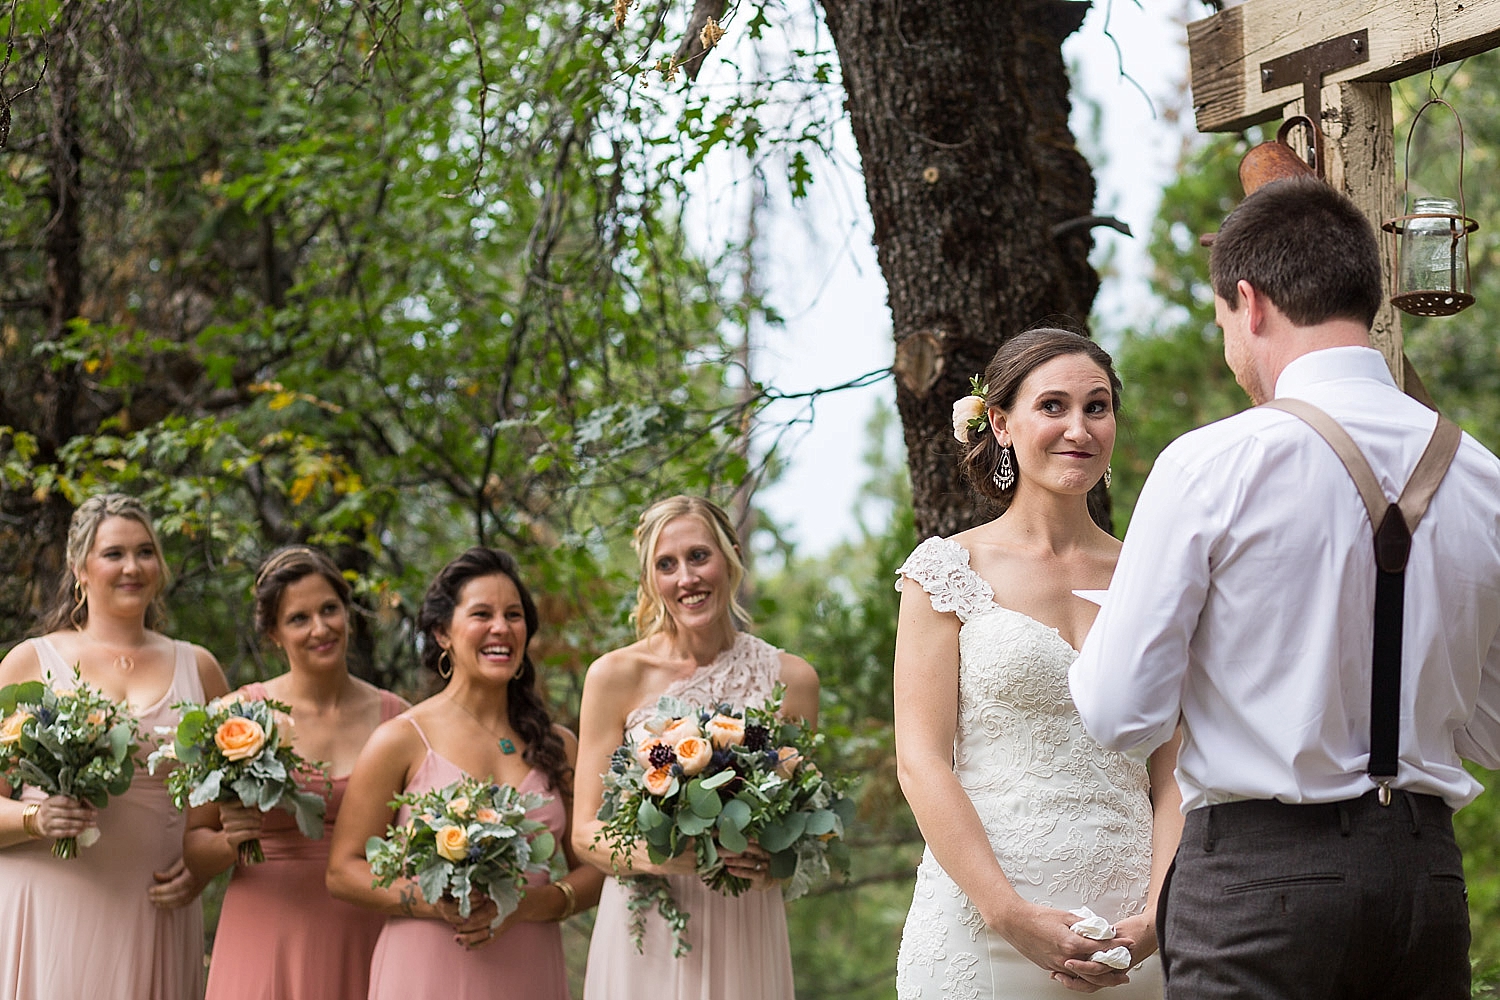 Yosemite Wedding Ceremony at Evergreen Lodge Wapama Site